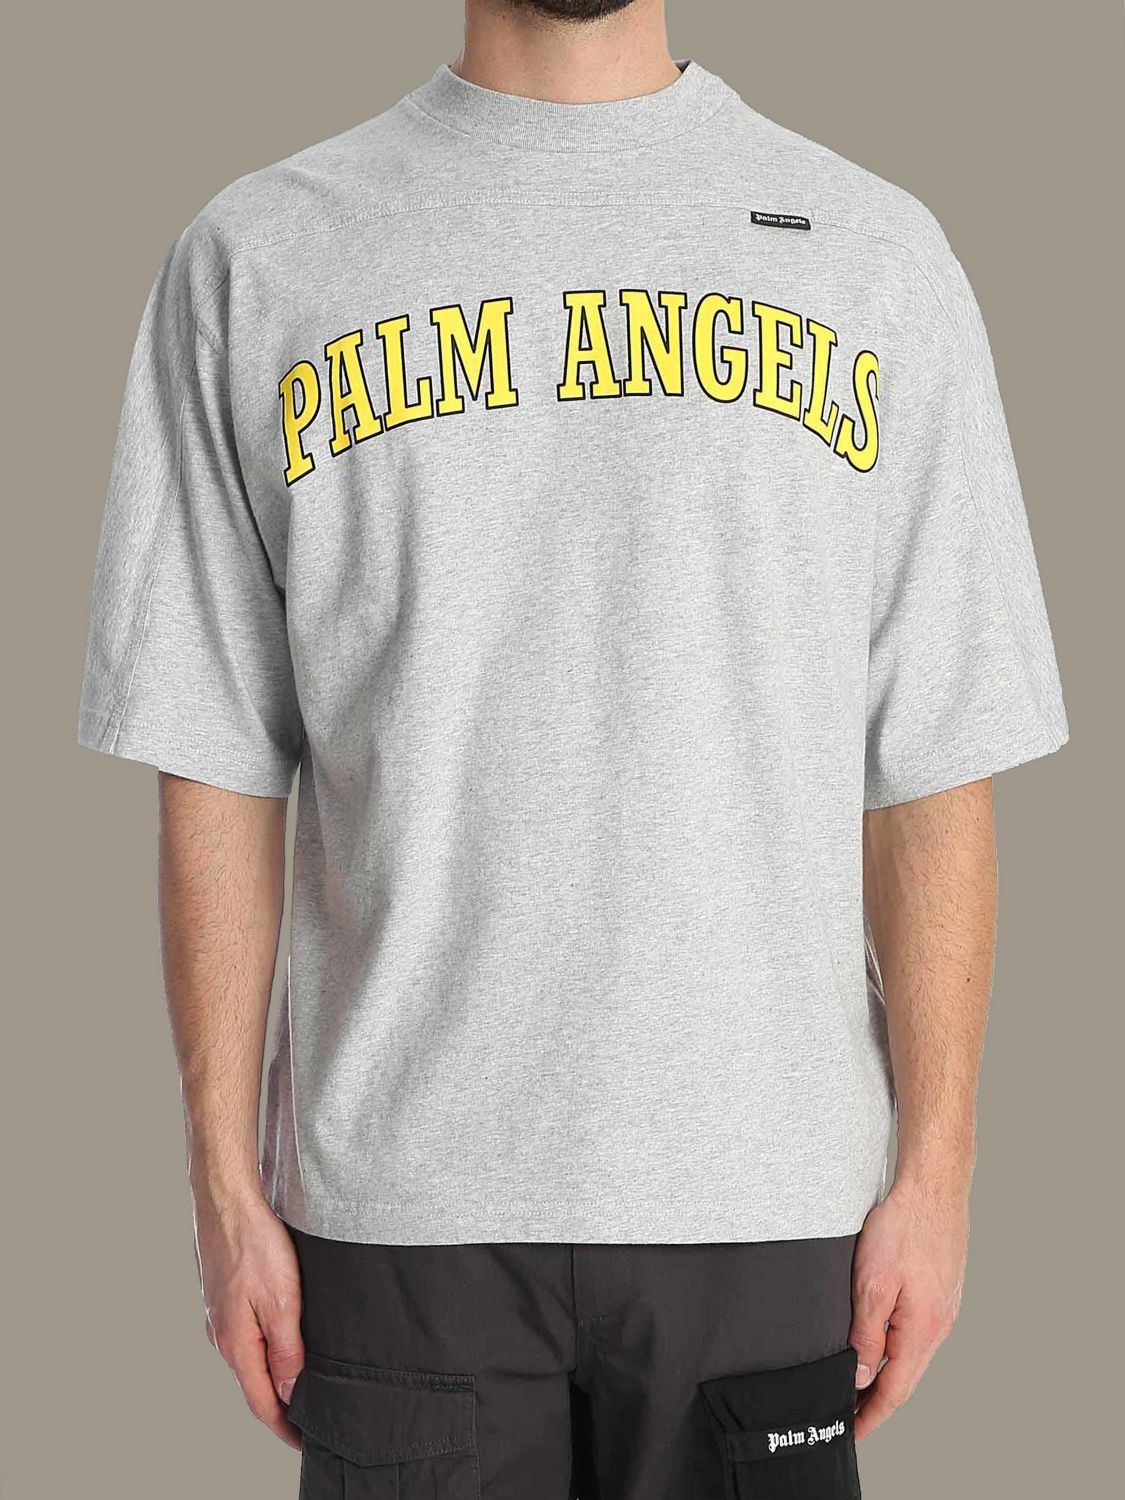 palm angels grey t shirt